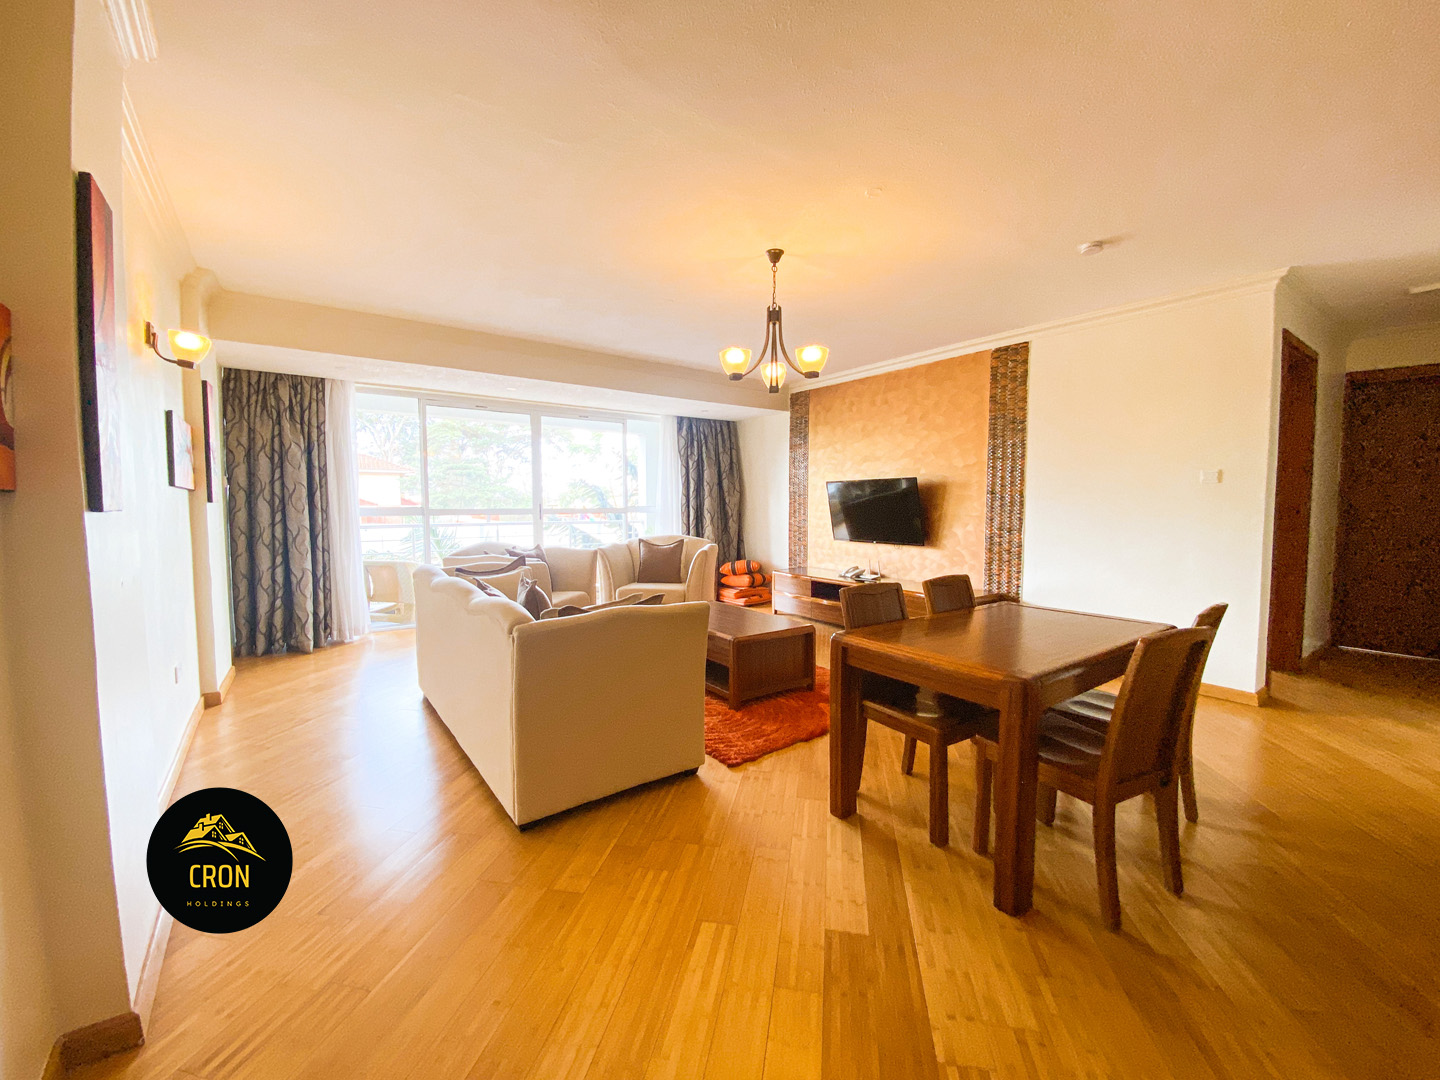 Two Bedroom apartment for sale Kiambu | Cron Holdings